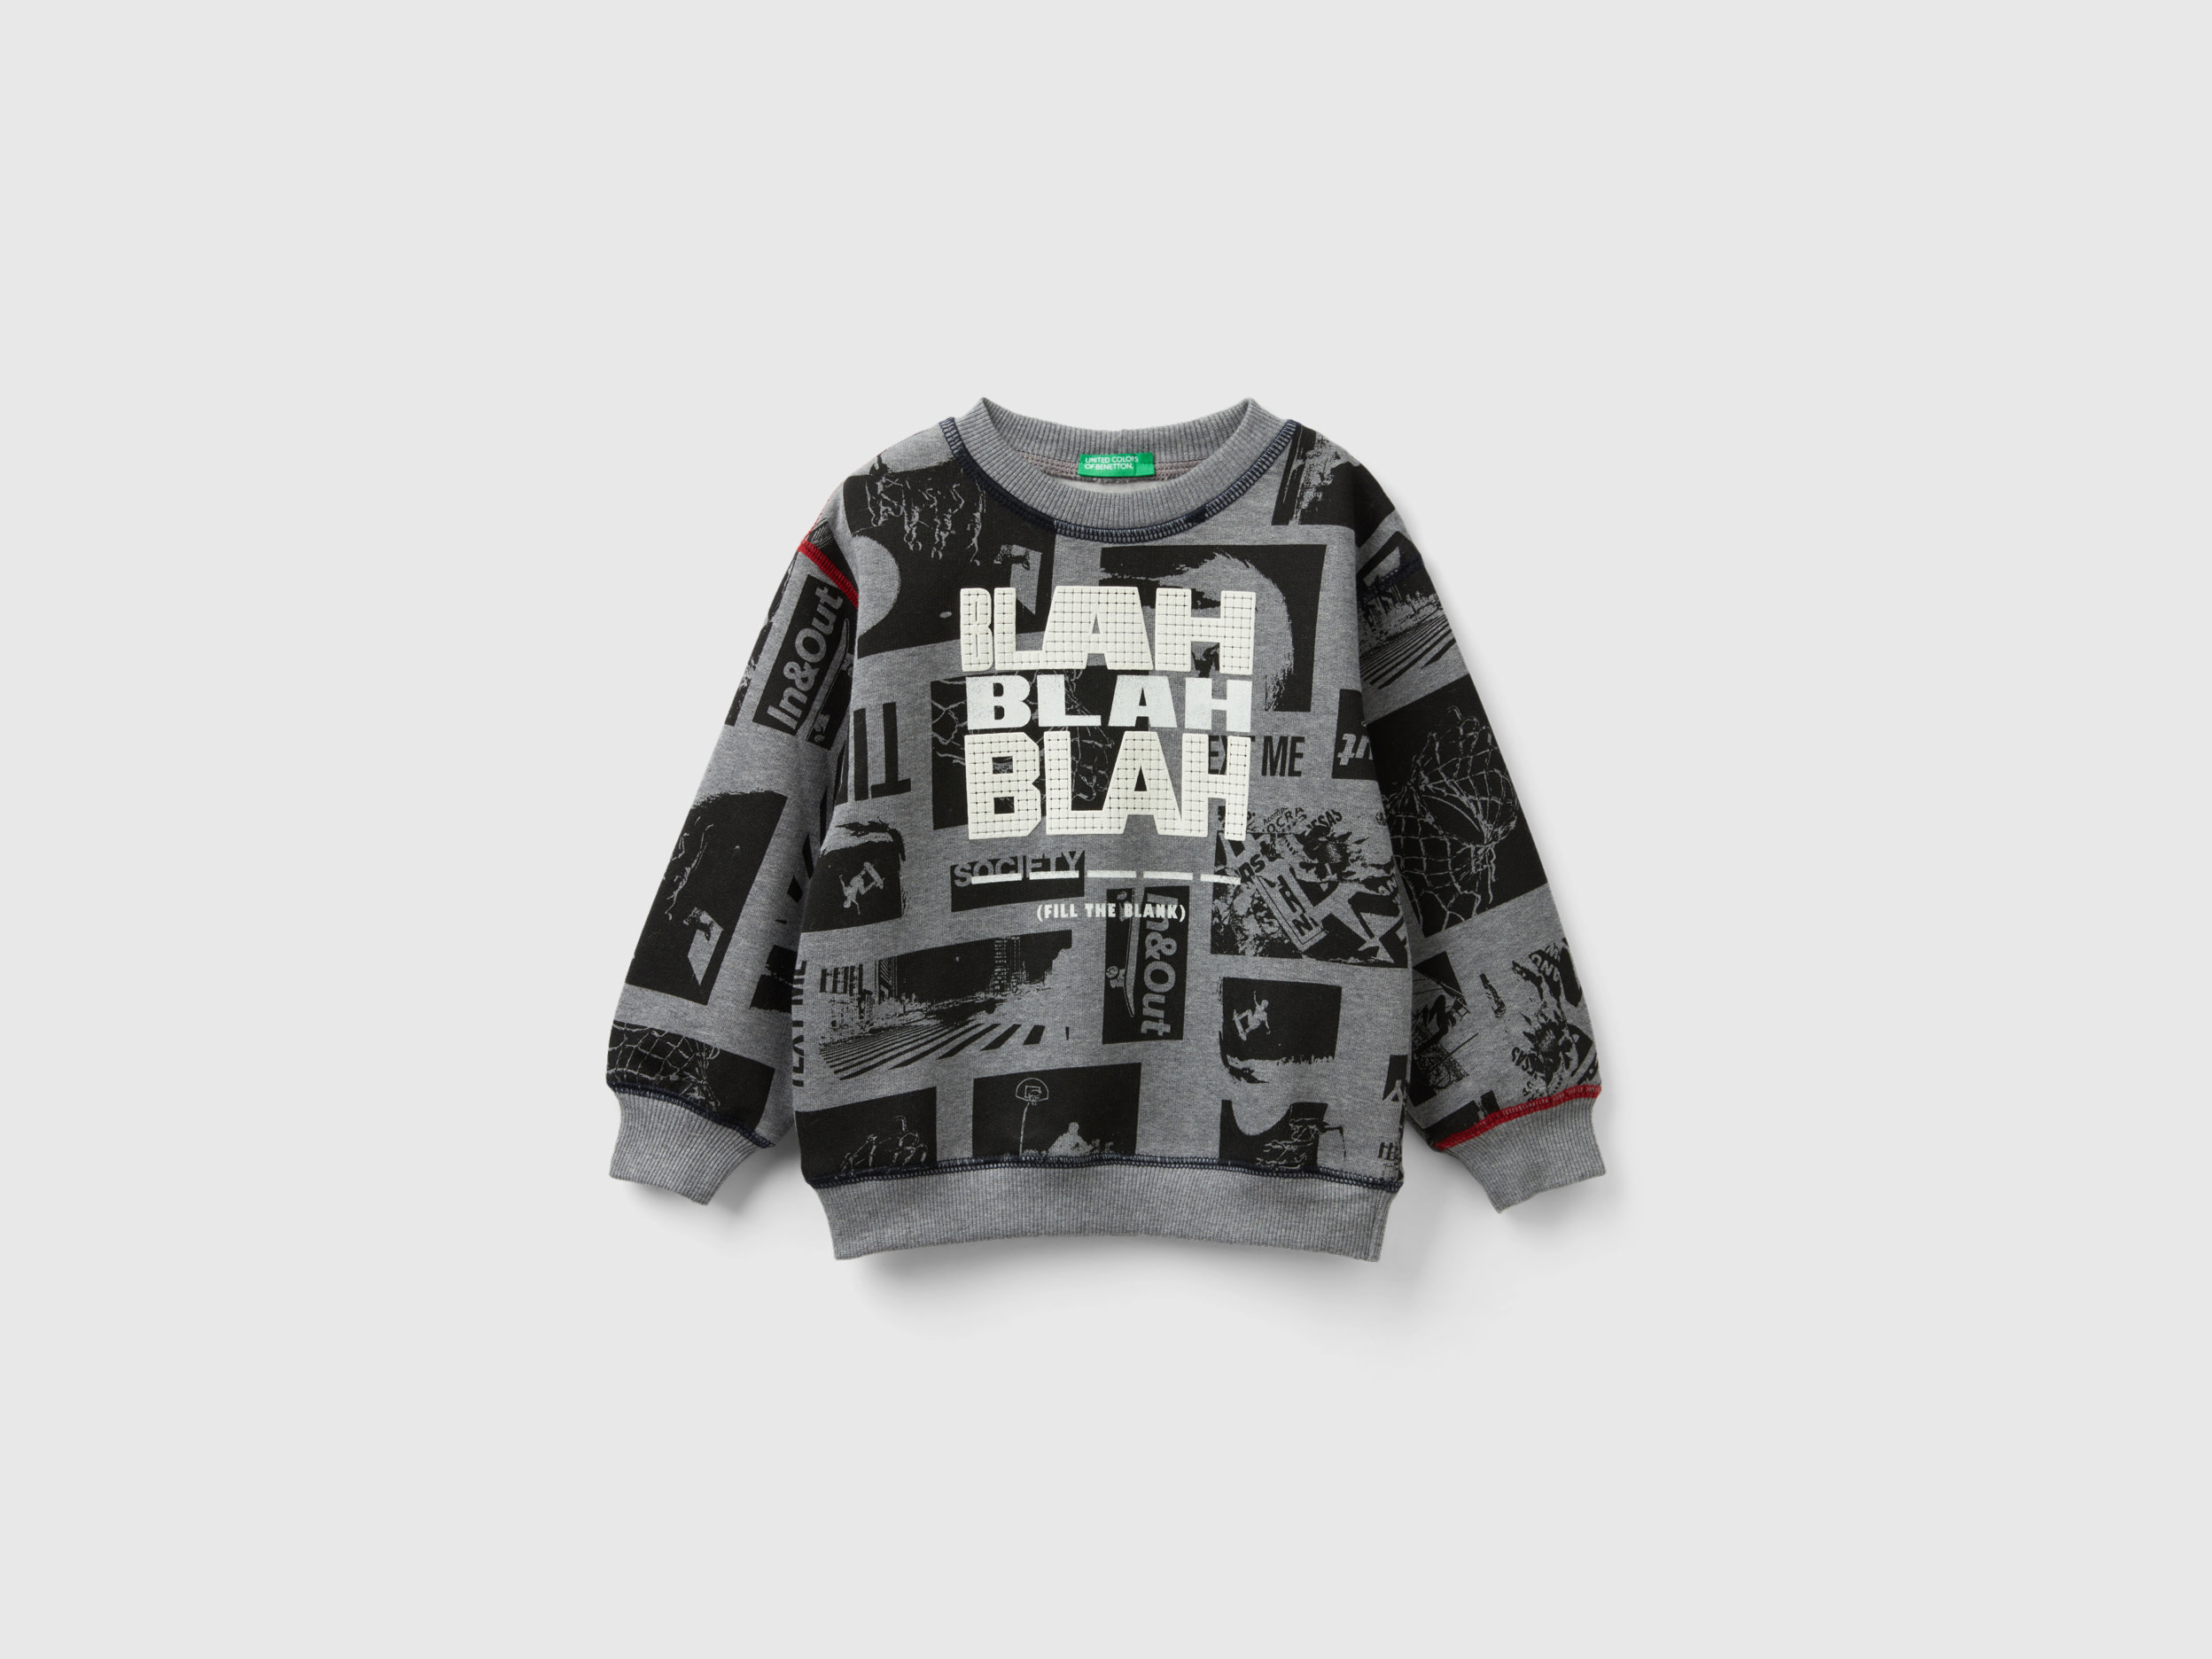 Benetton, Pullover Sweatshirt With City Print, size 2-3, Gray, Kids